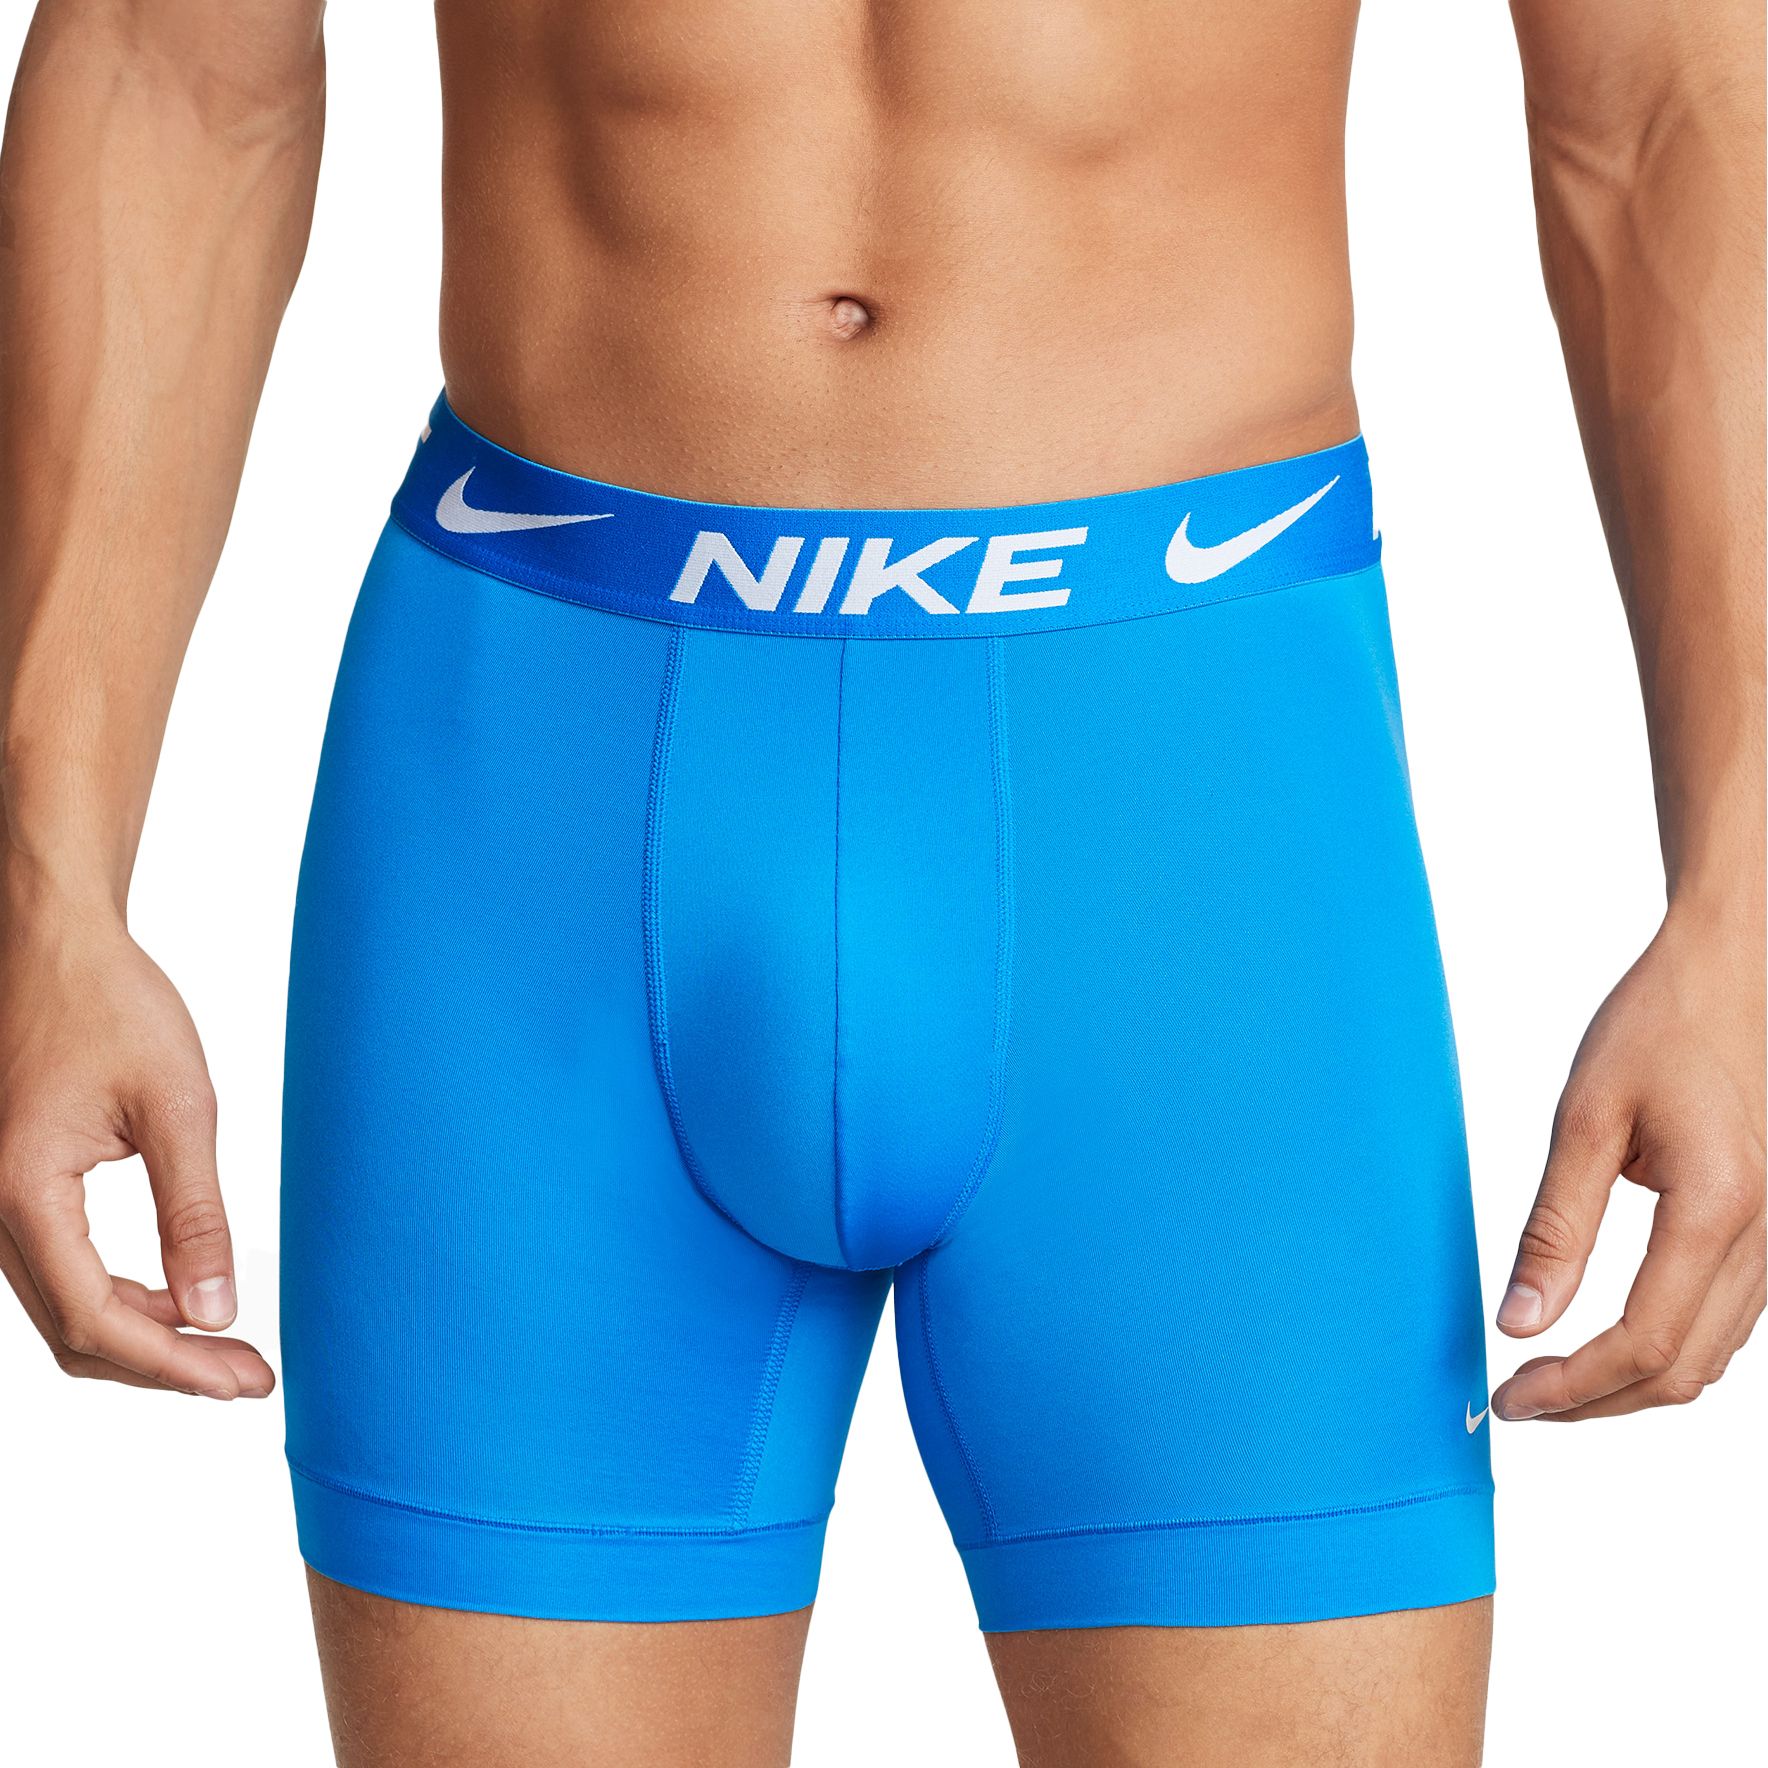 Nike / Men's Dri-FIT Essential Micro Long Boxer Briefs - 3 Pack